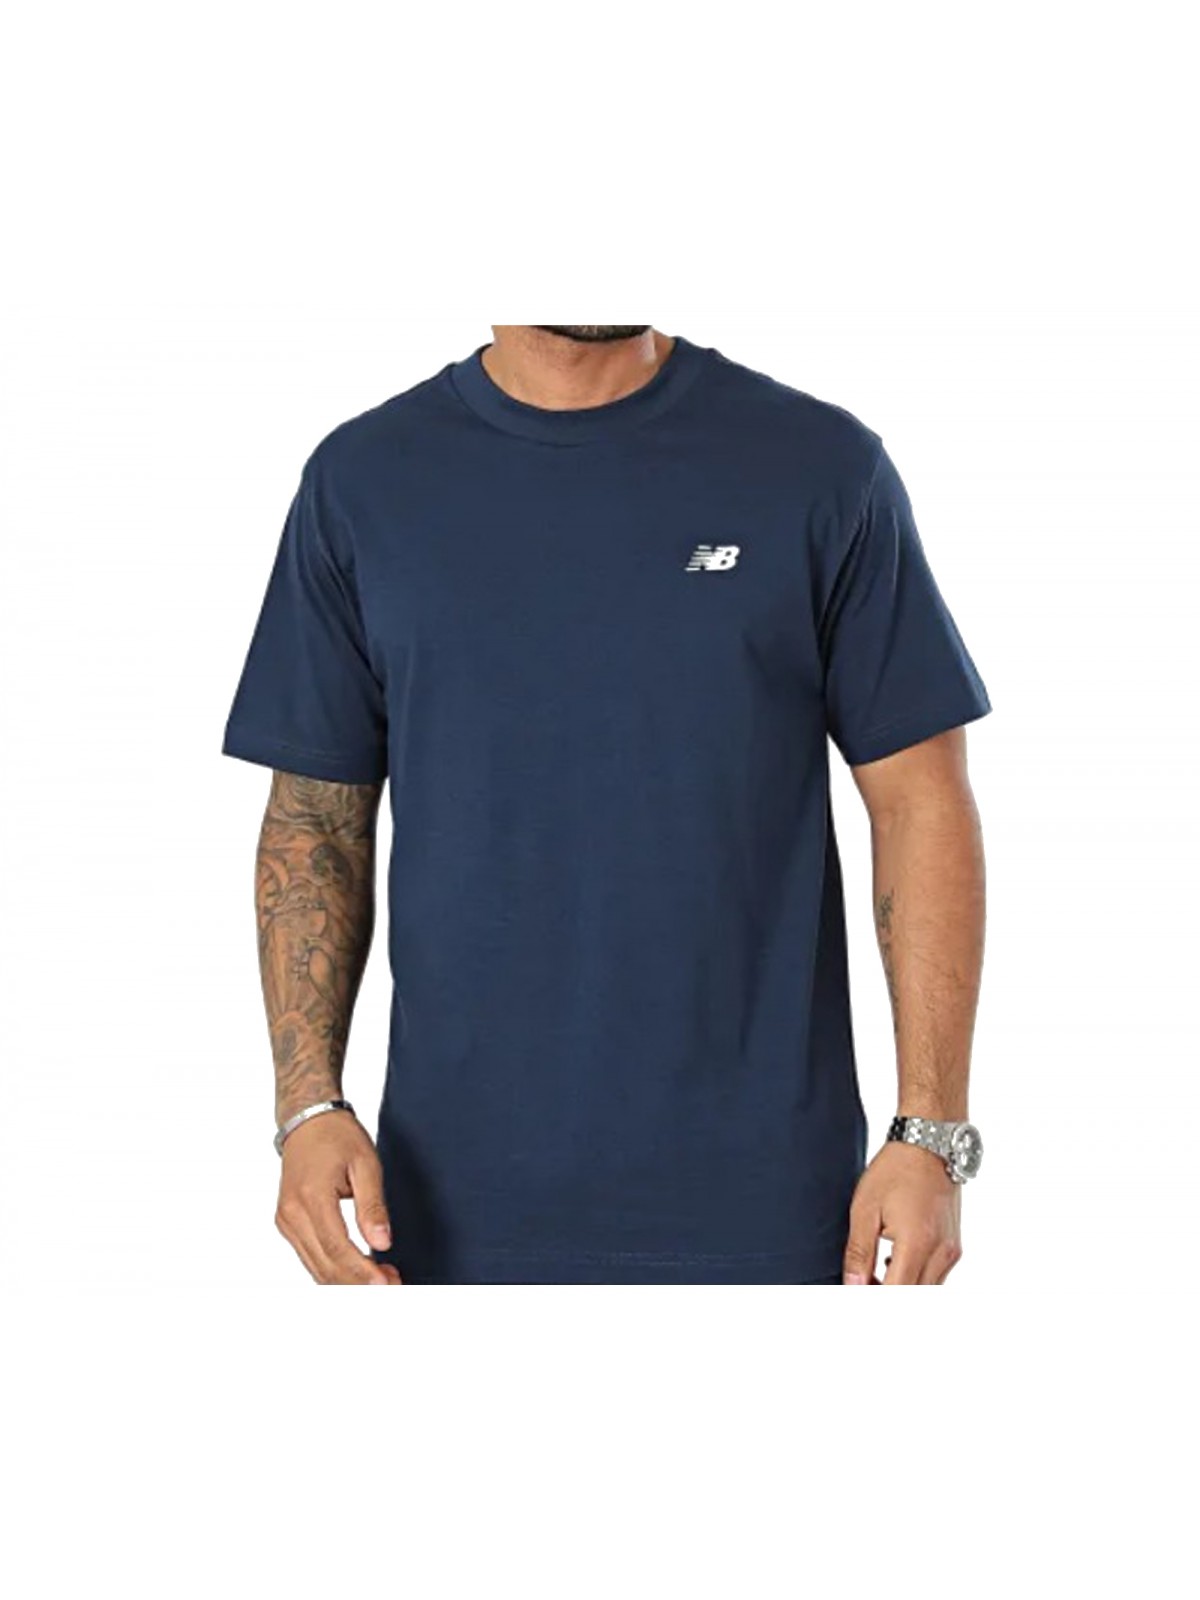 New Balance MT41509 Tee shirt marine